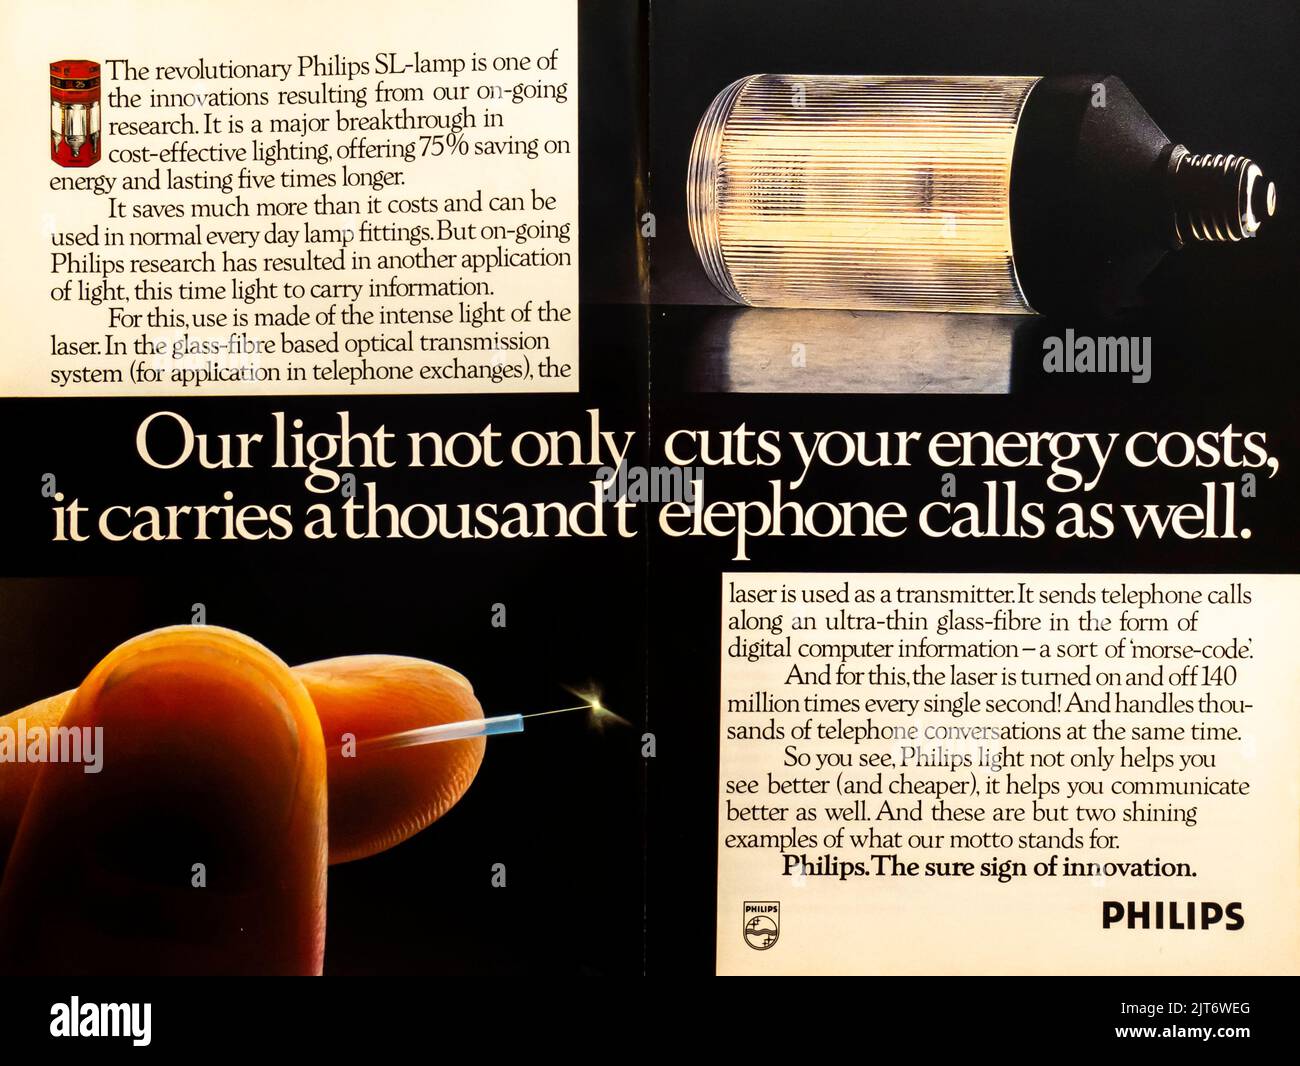 Philips SL lamp, technology advertisement placed inside NatGeo magazine ...